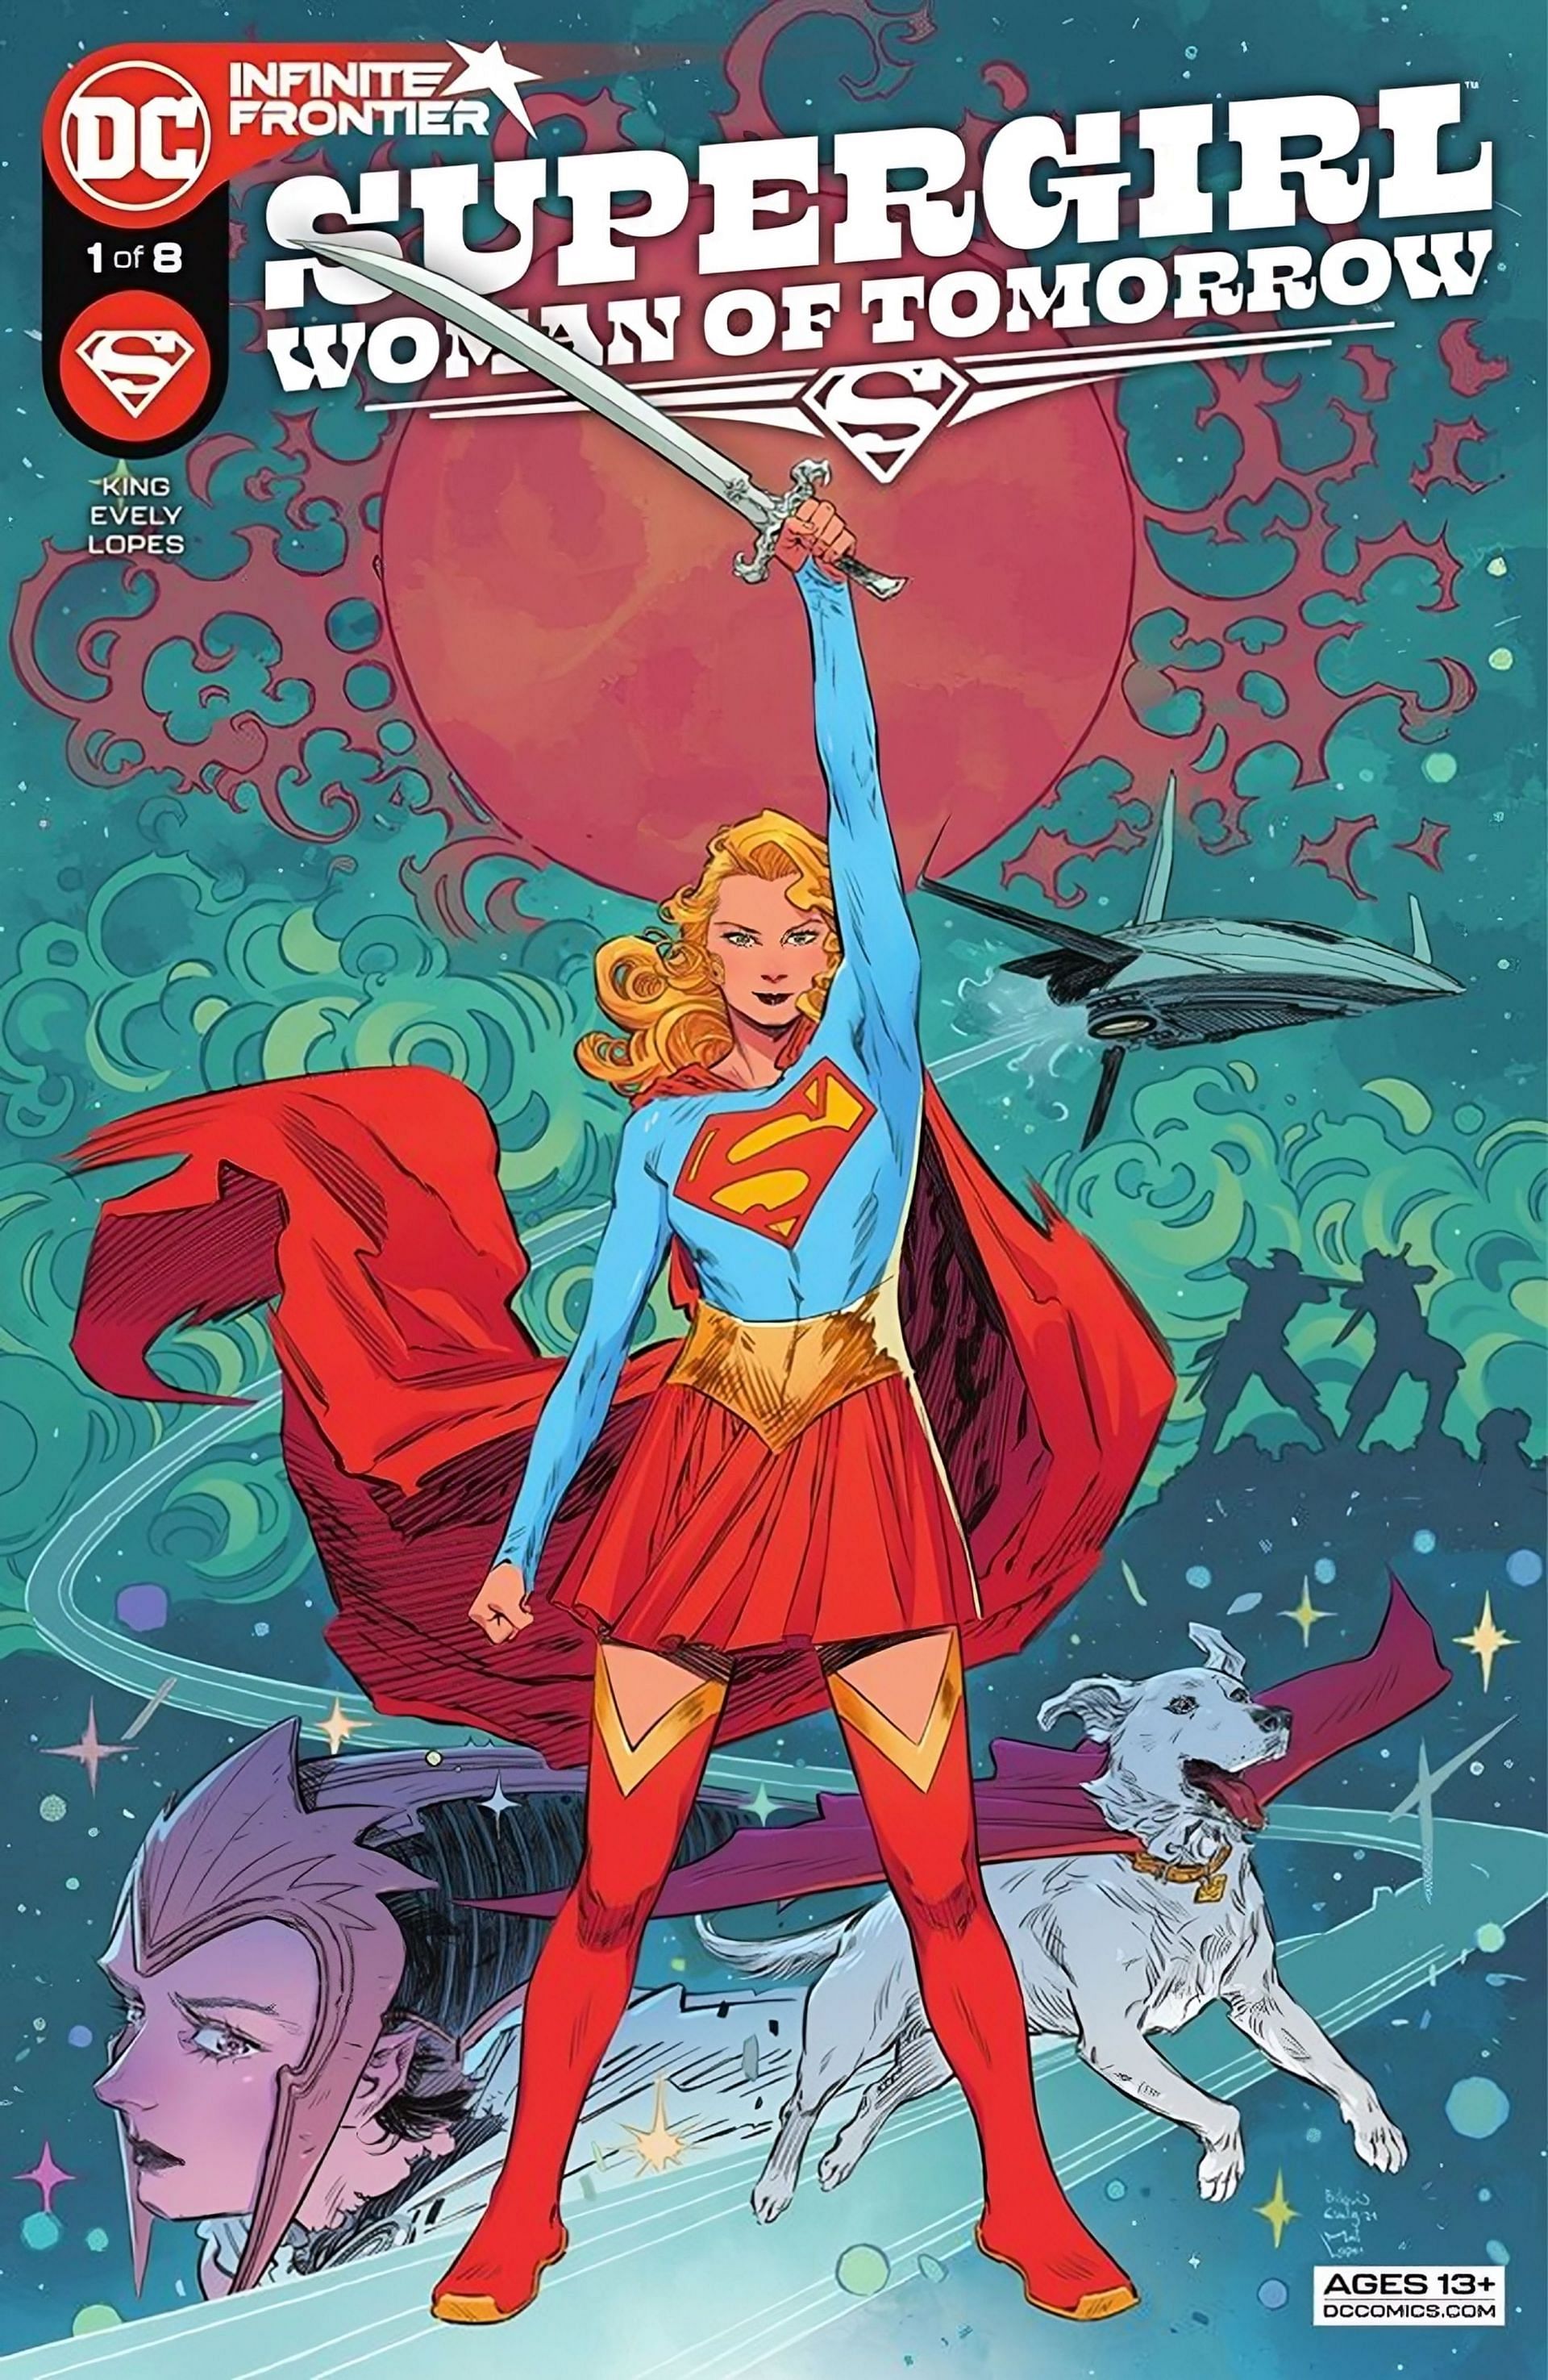 Comic cover (Image via DC Comics)